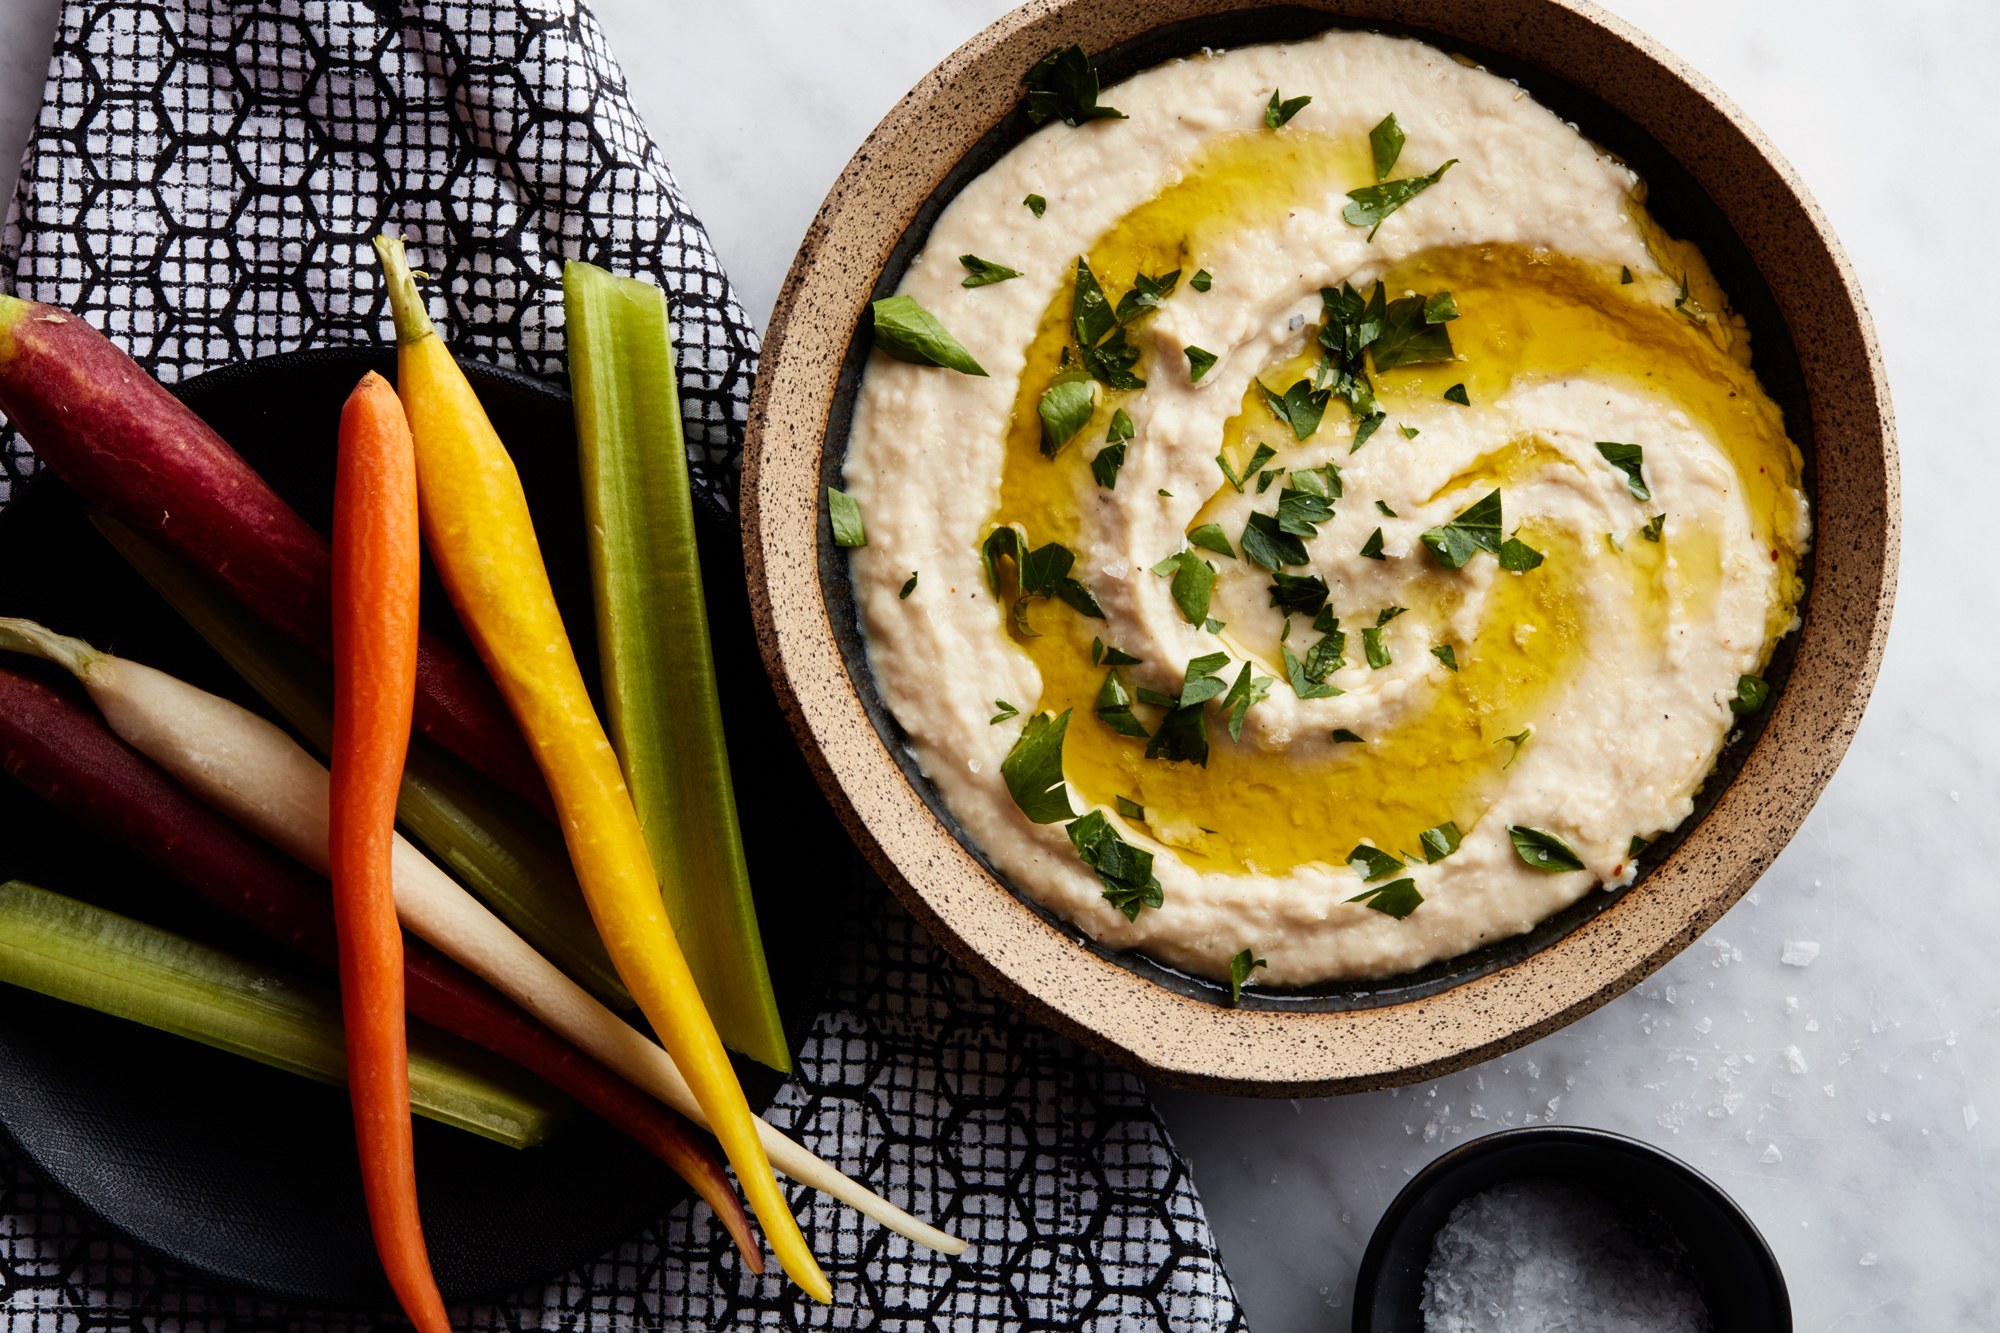 Popular Hummus Brands Contaminated with Herbicide